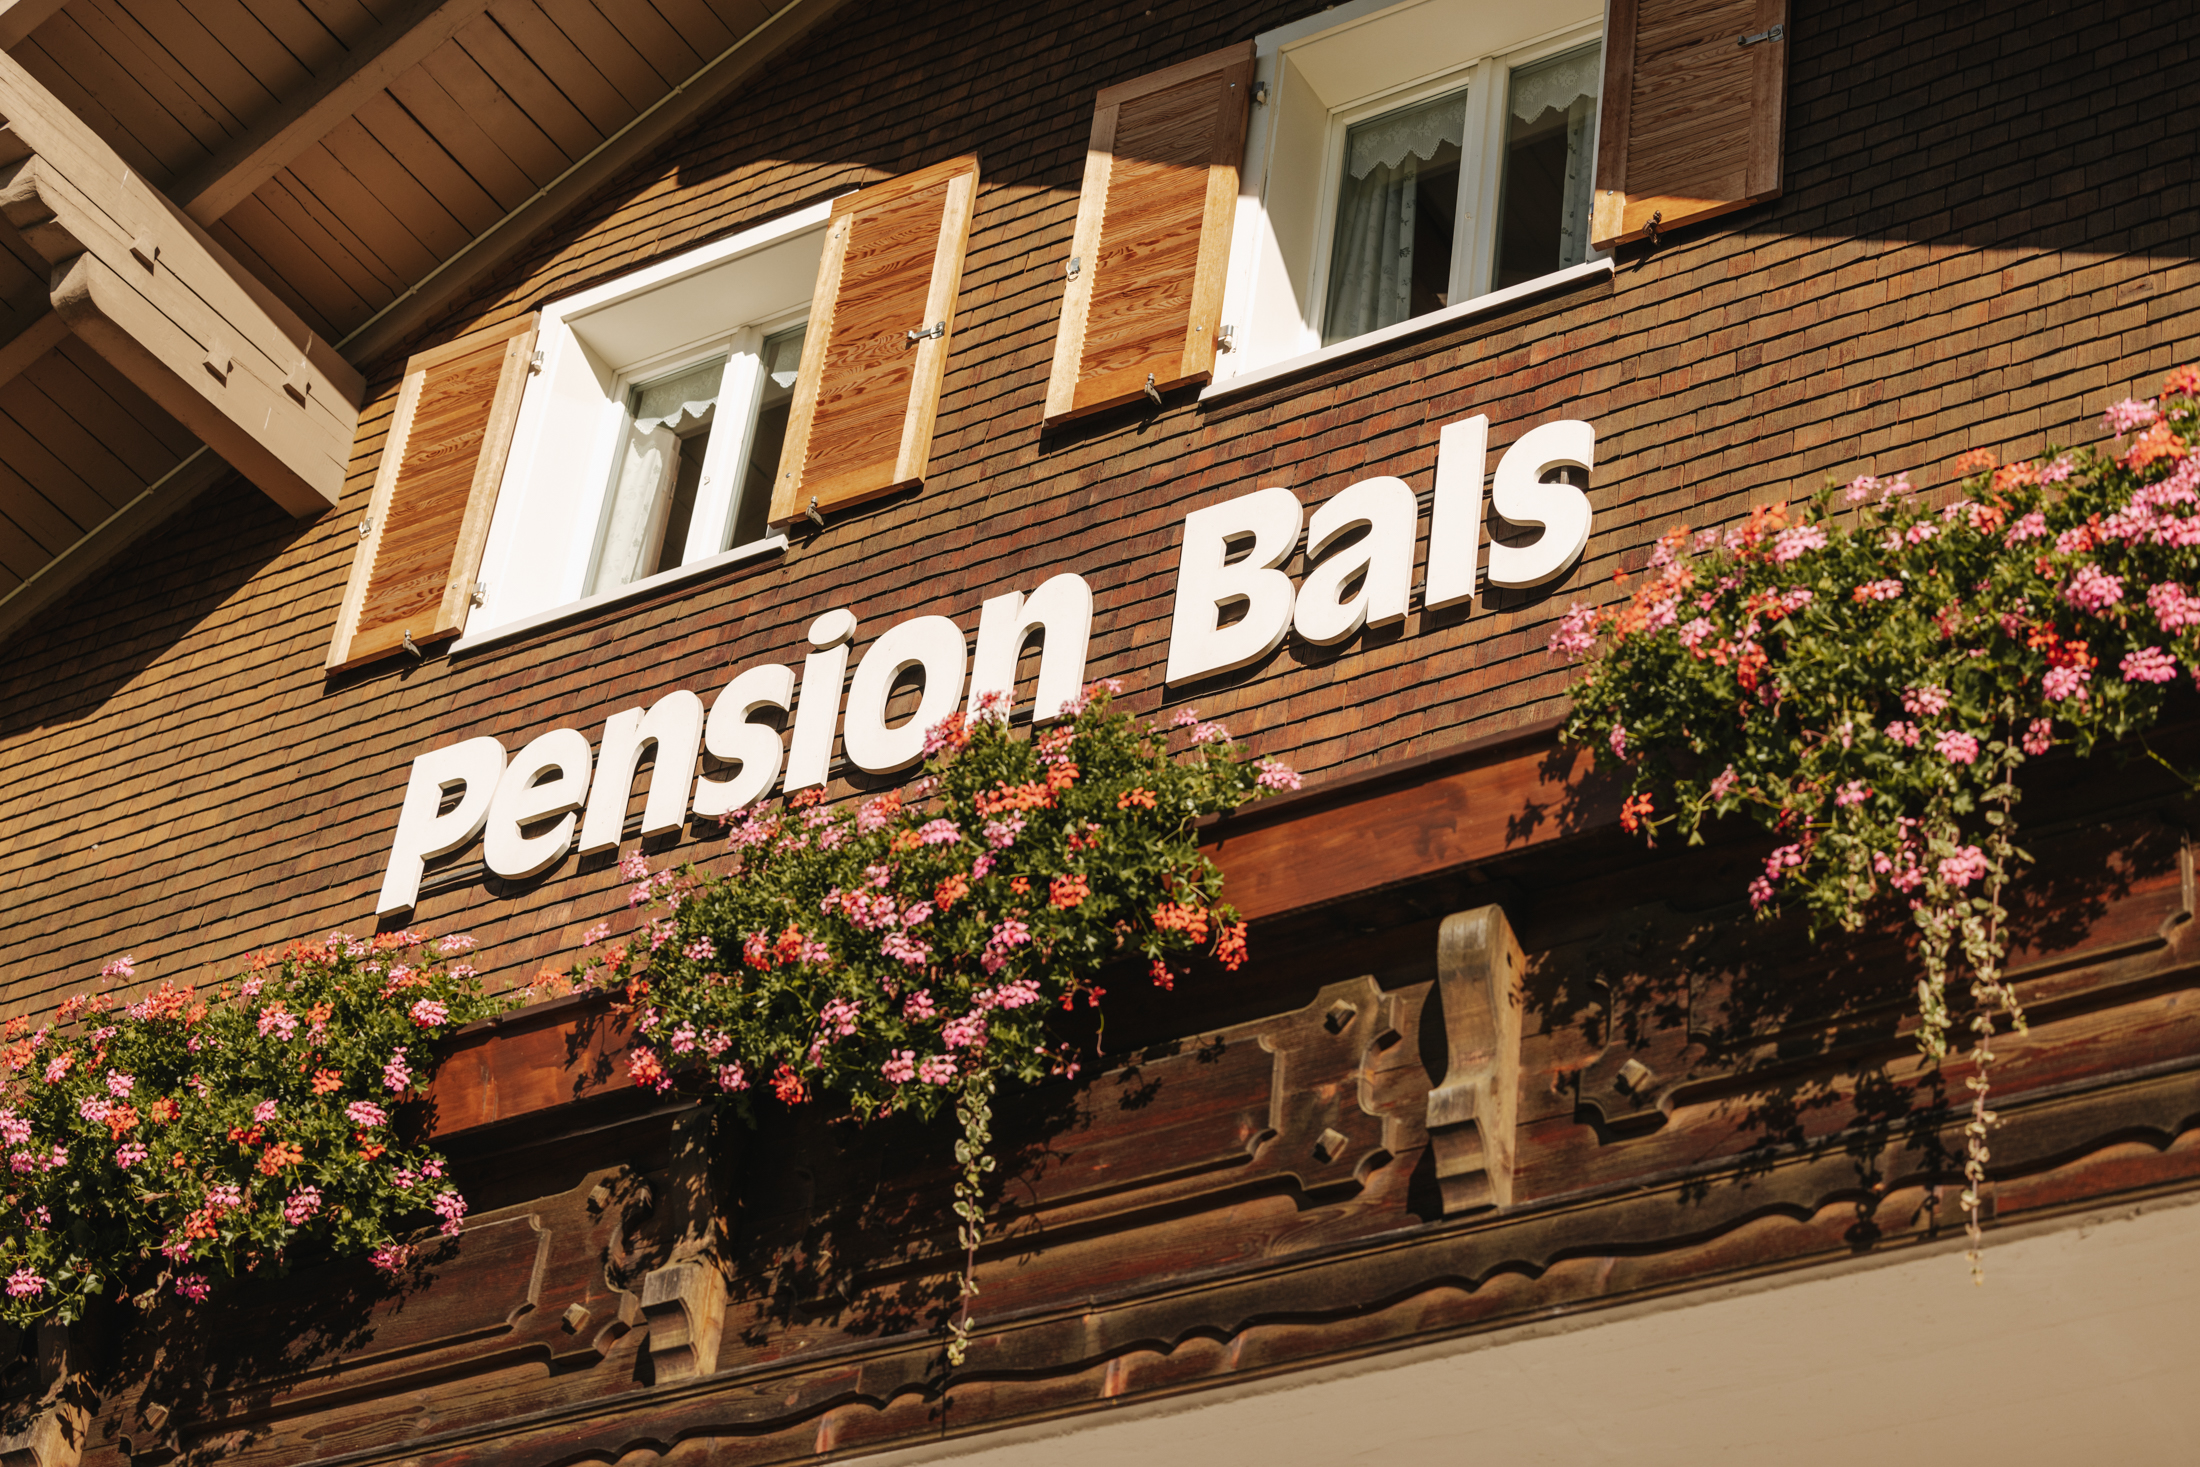 Diplos / Pension Bals / Moosbrugger Roman